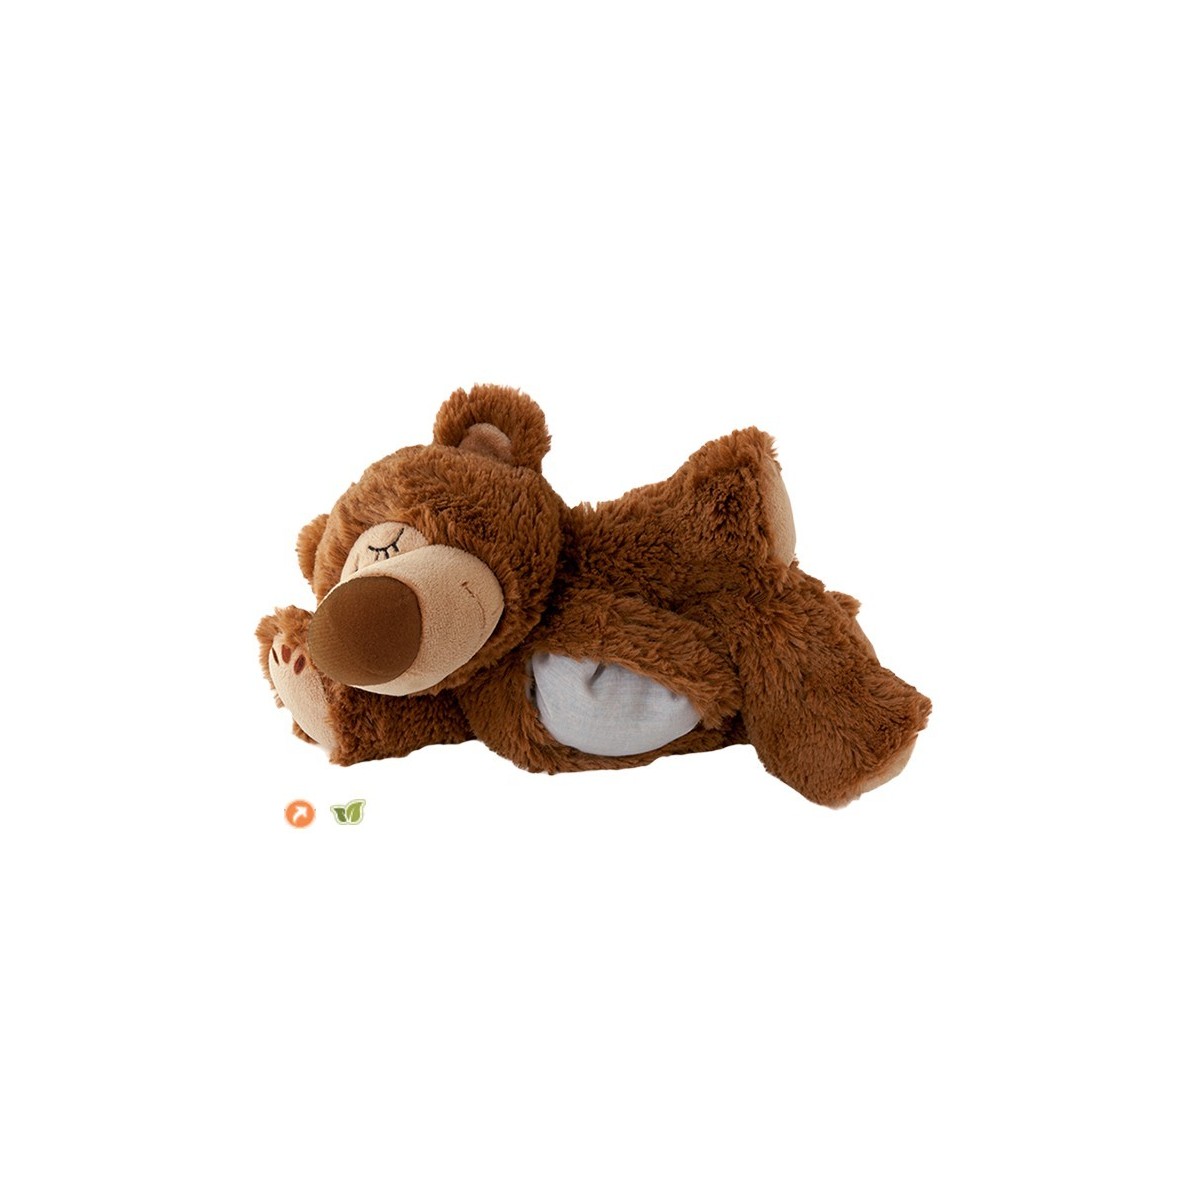 Sleepy Bear brown